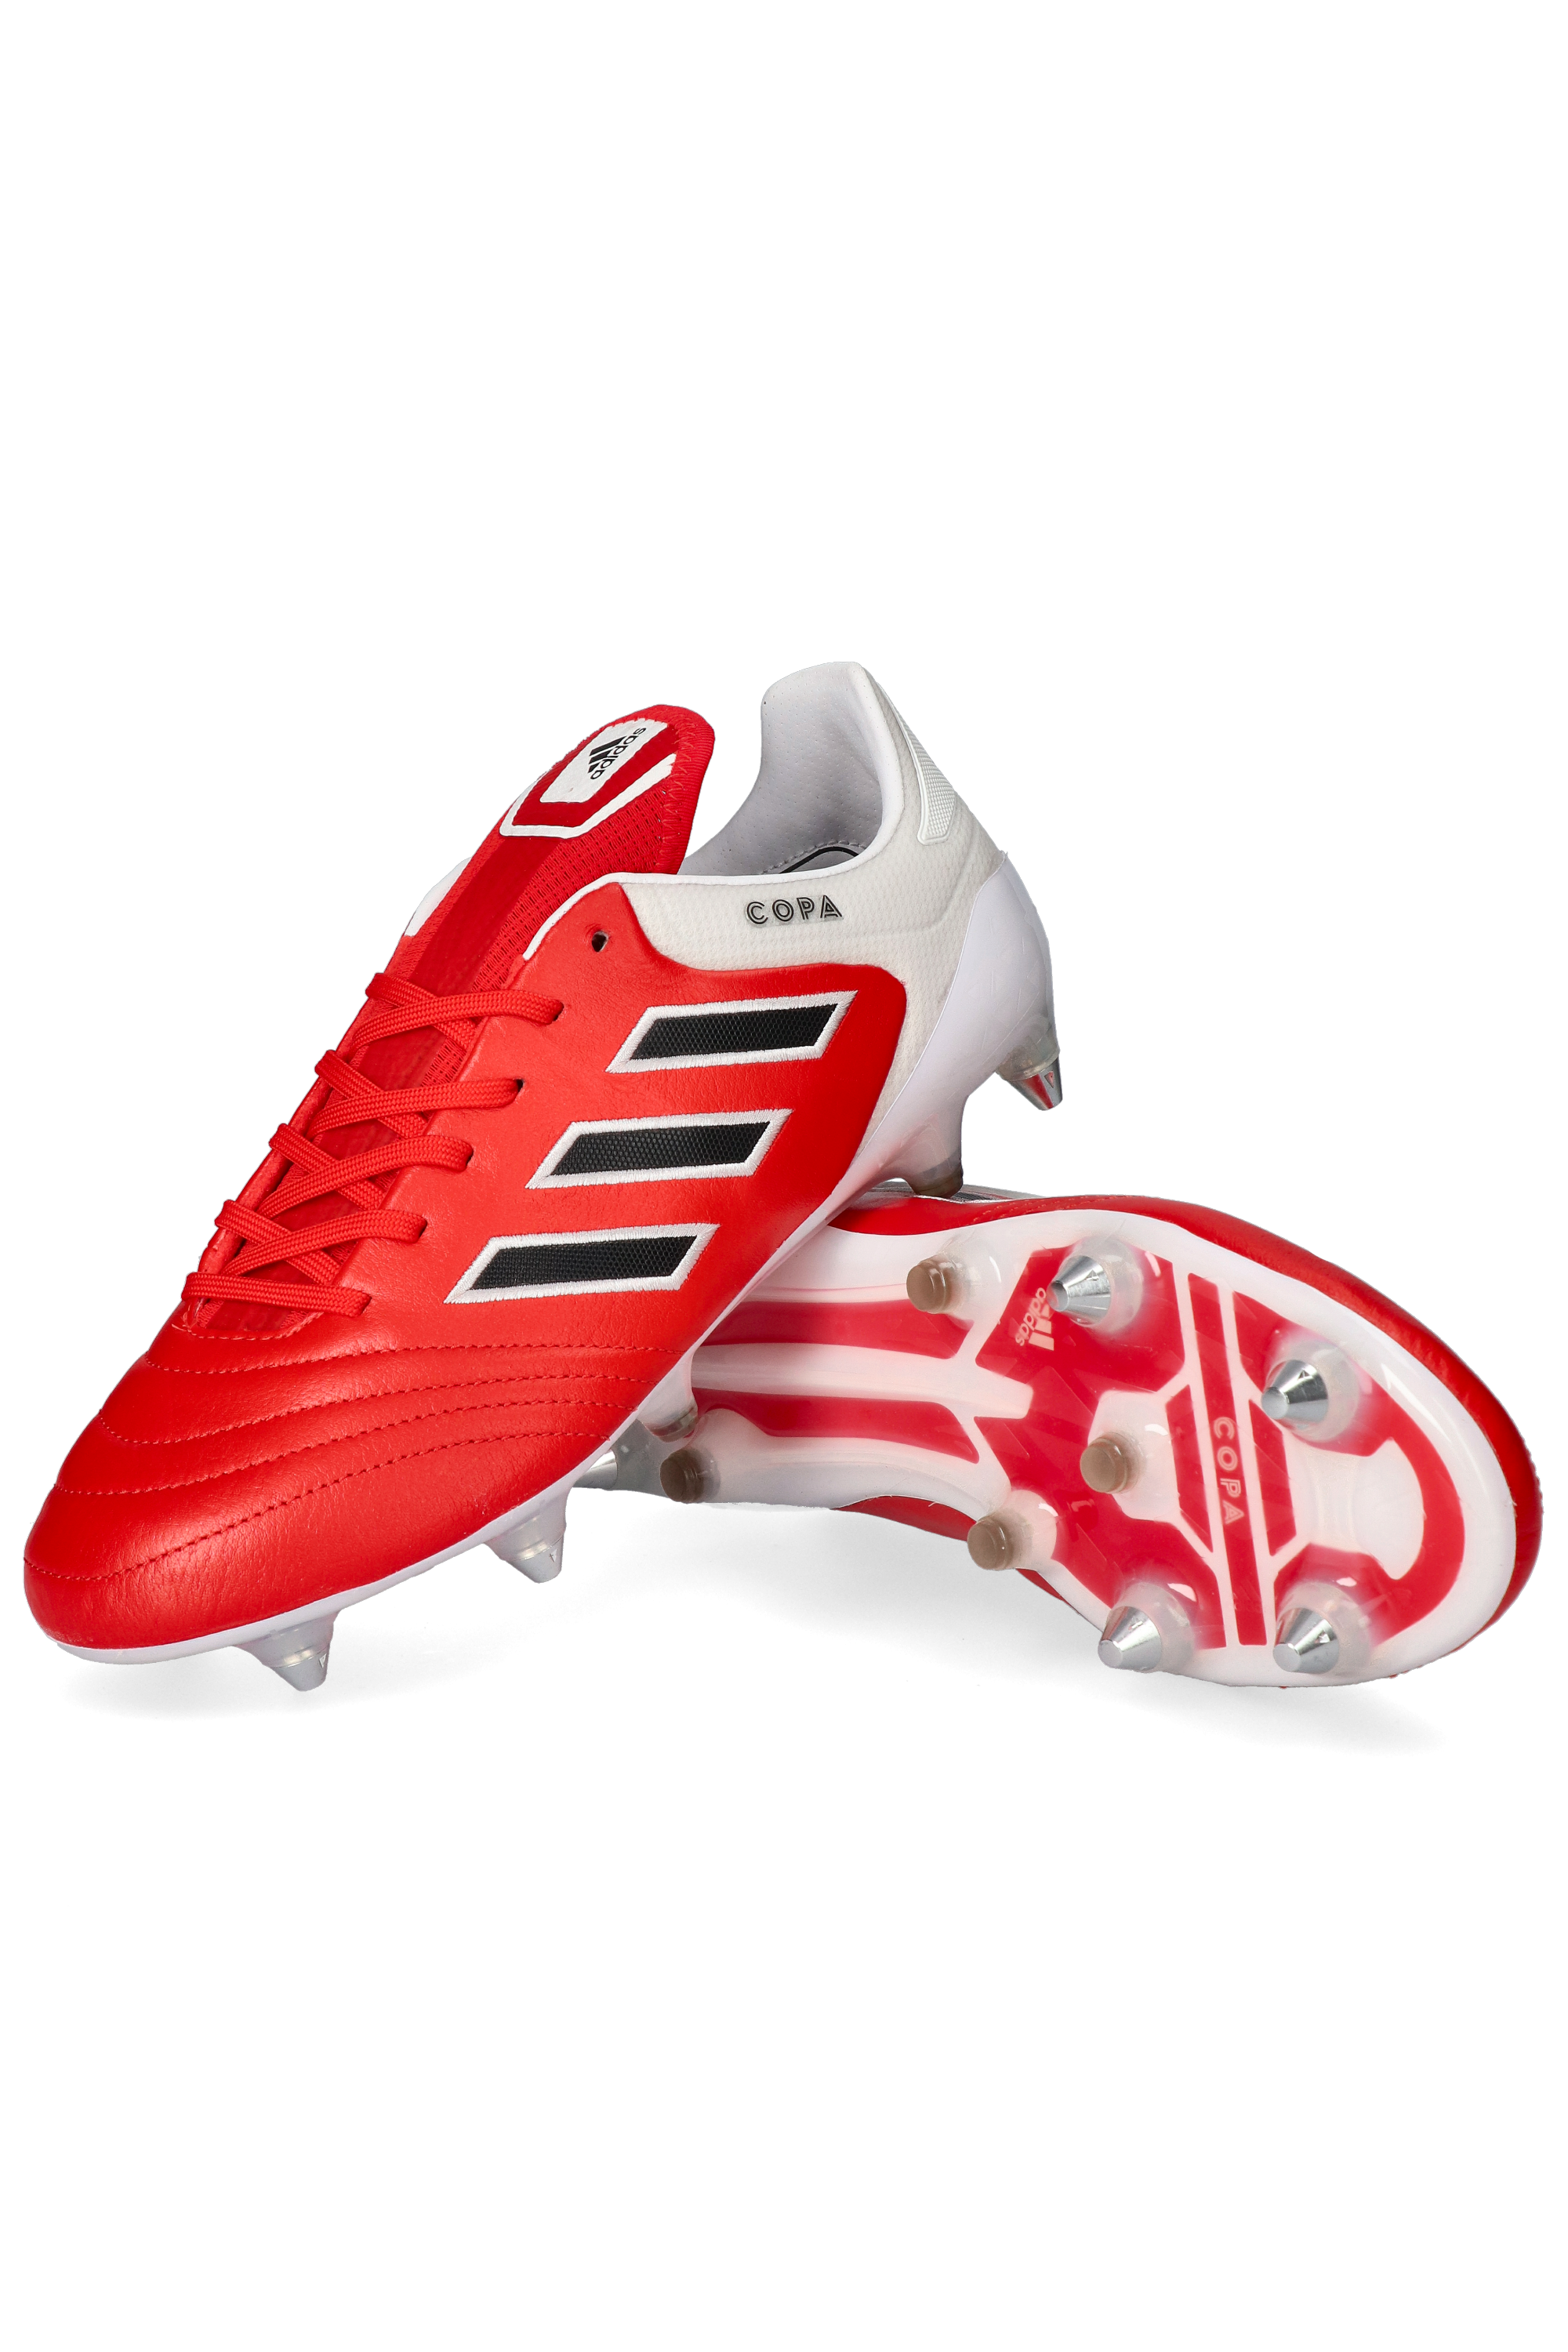 adidas Copa 17.1 SG | R-GOL.com - Football boots \u0026 equipment